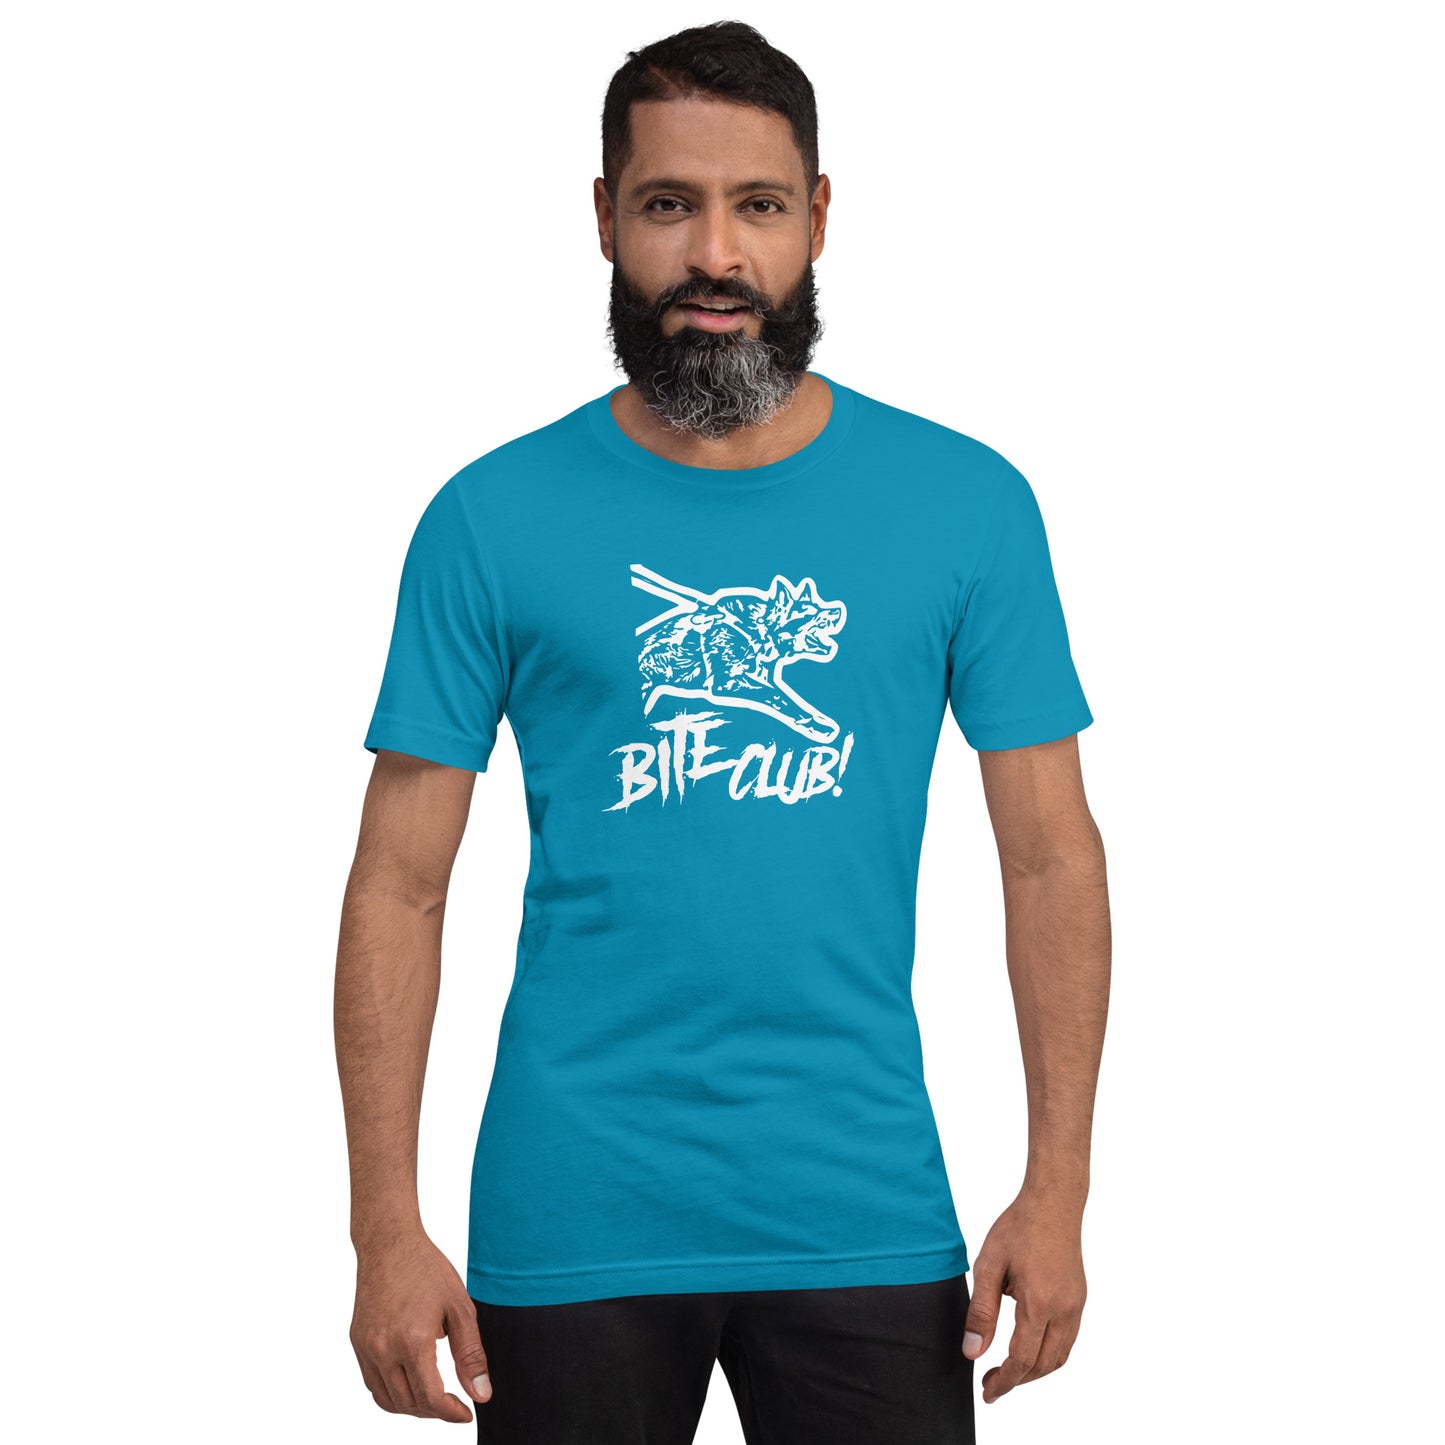 BITE CLUB- Unisex t-shirt